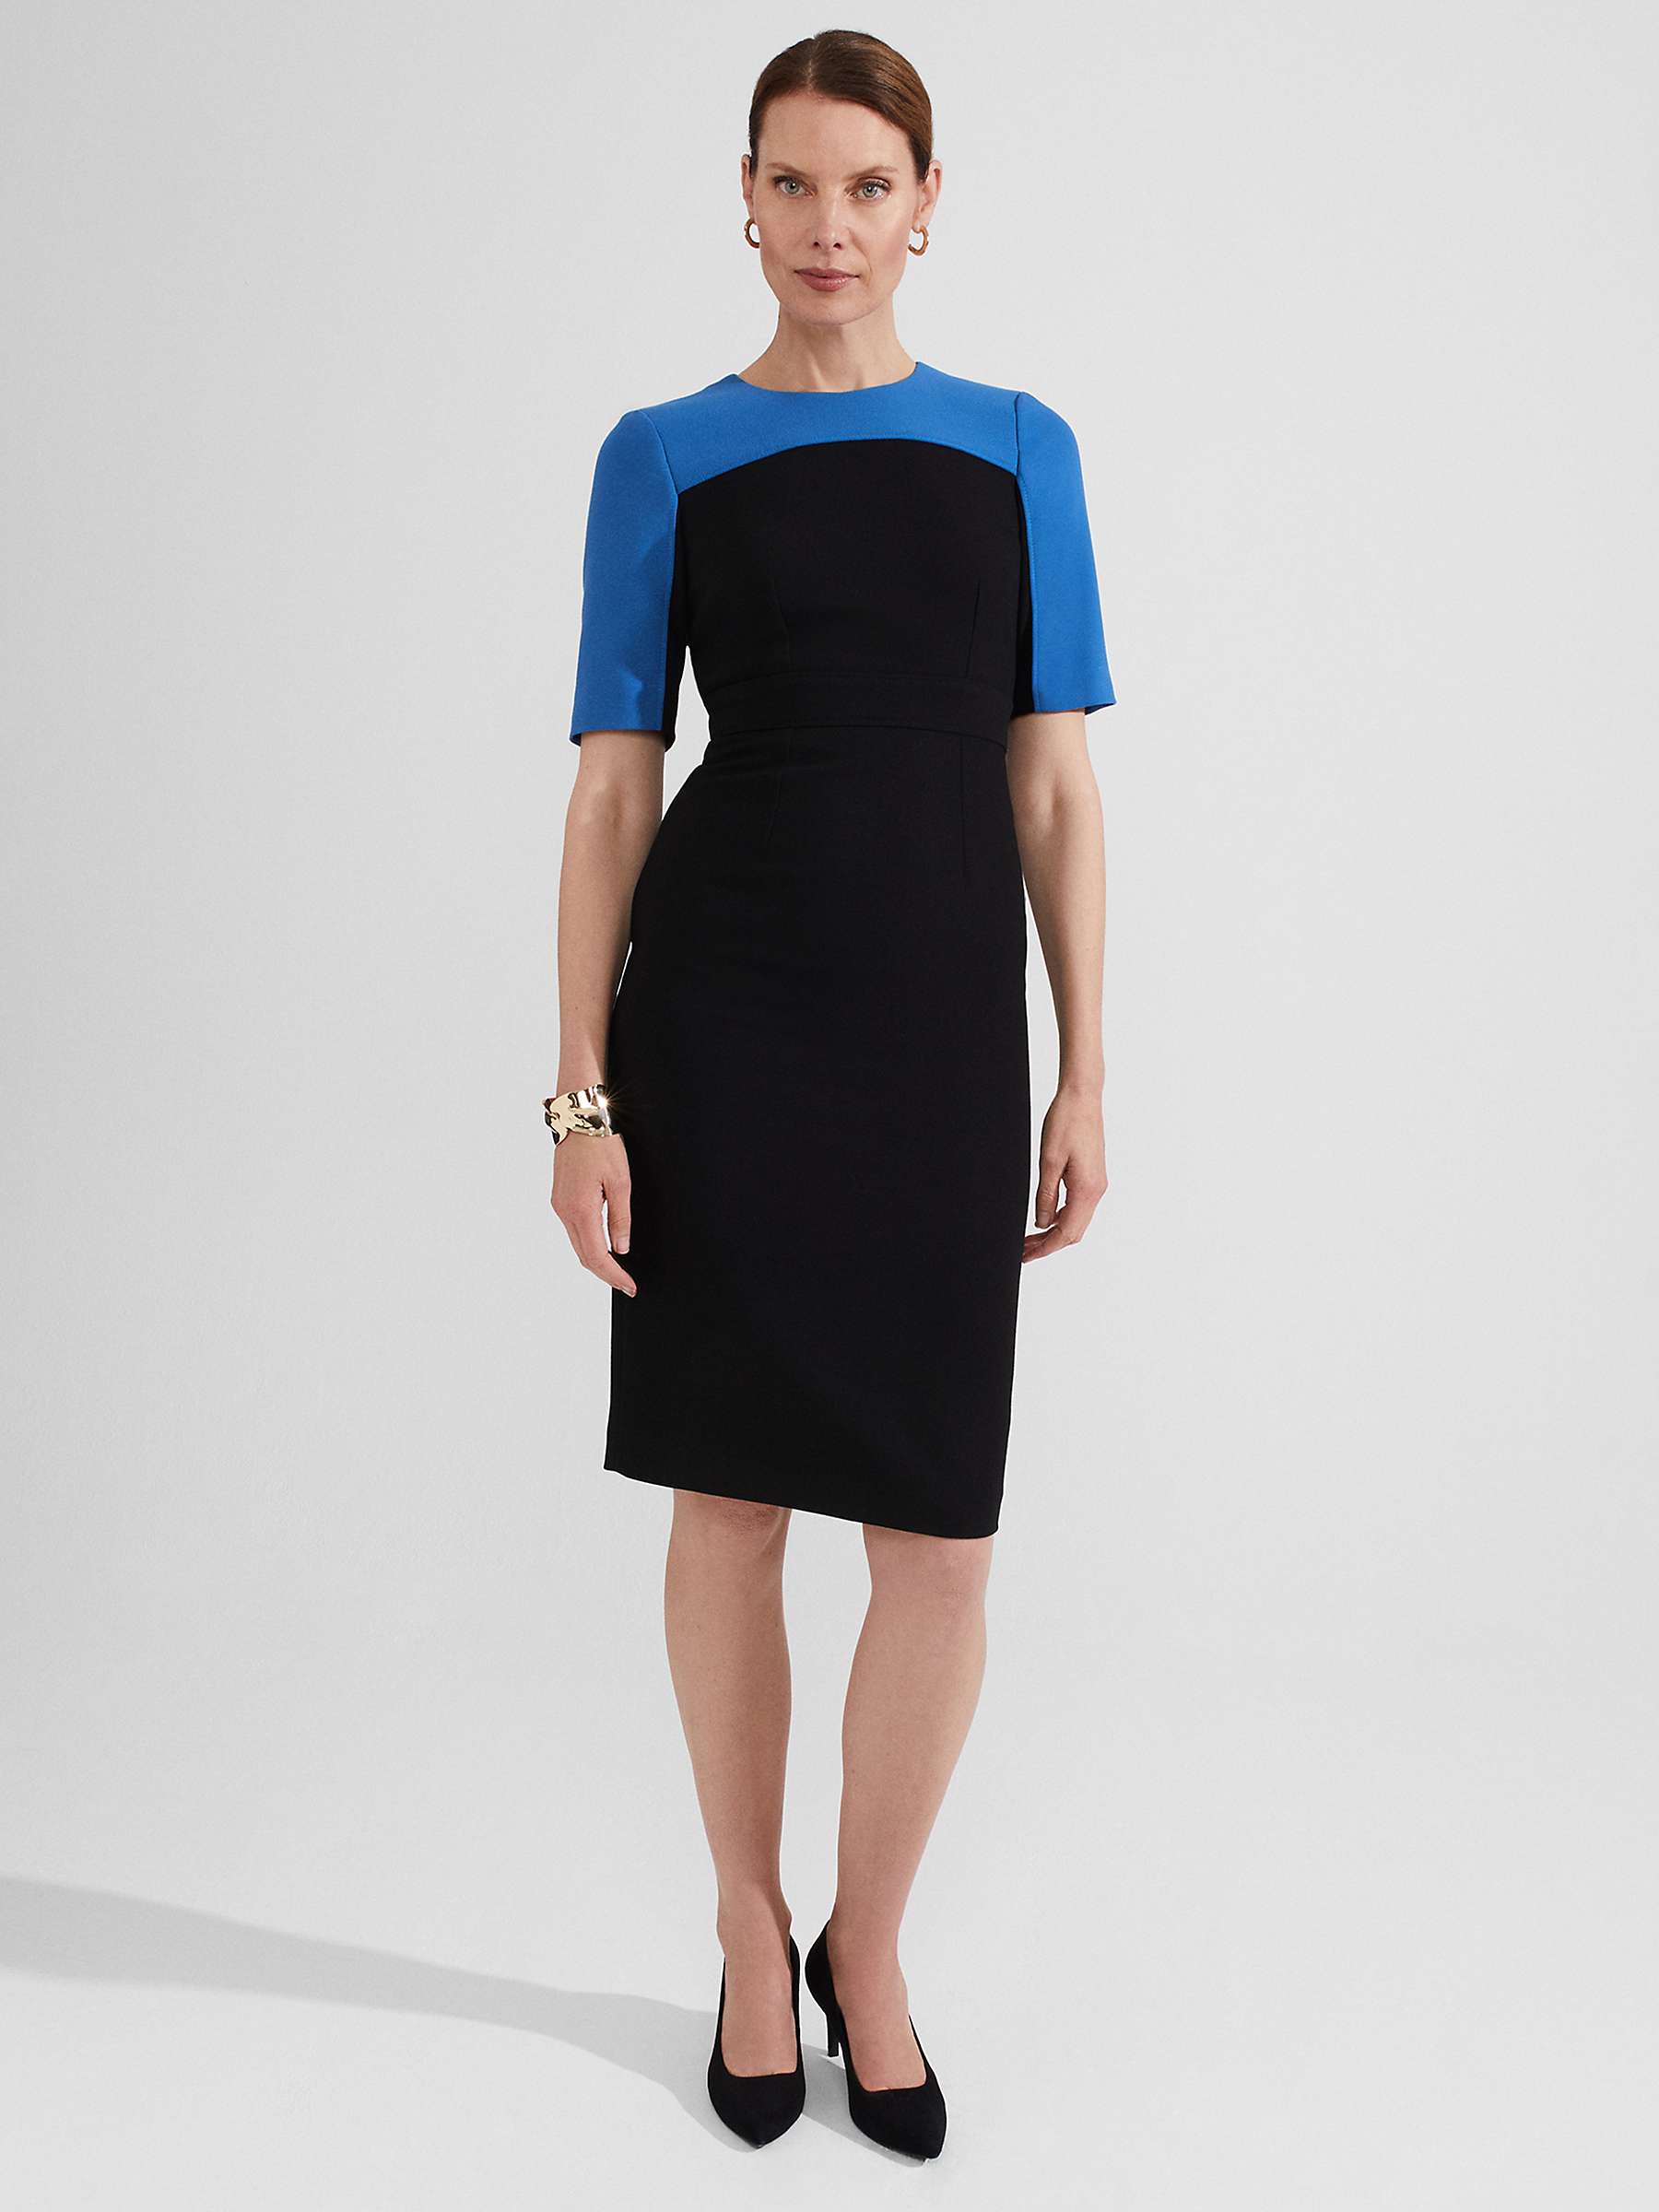 Hobbs Katya Colourblock Dress, Black/Blue at John Lewis & Partners